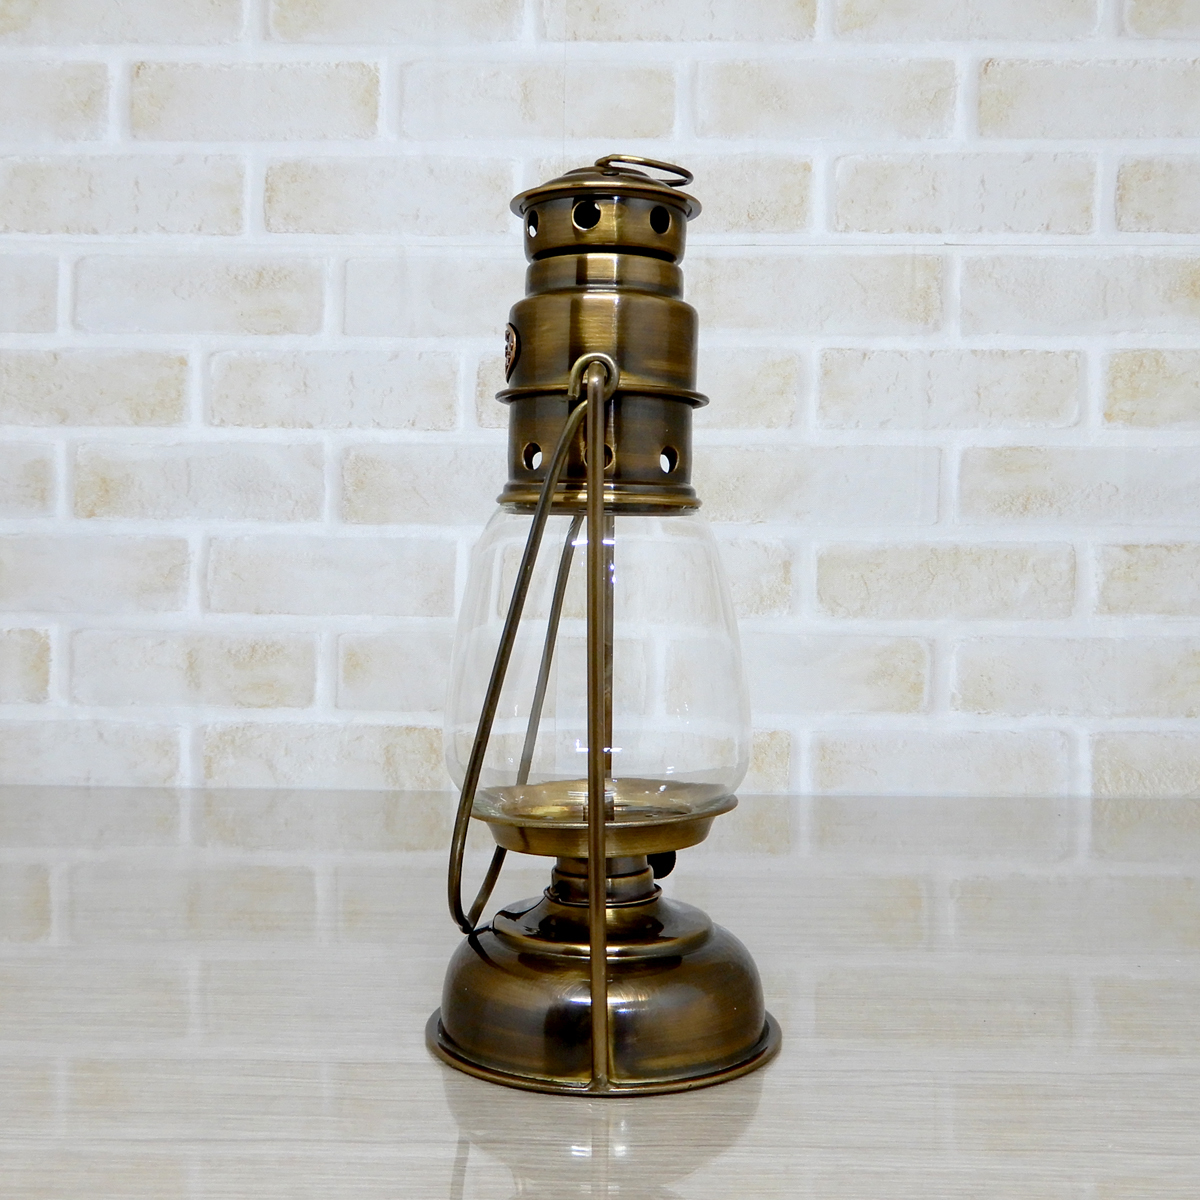 替芯付新品 Skaters Style Oil Lantern - Antique Solid Brass 【日本 